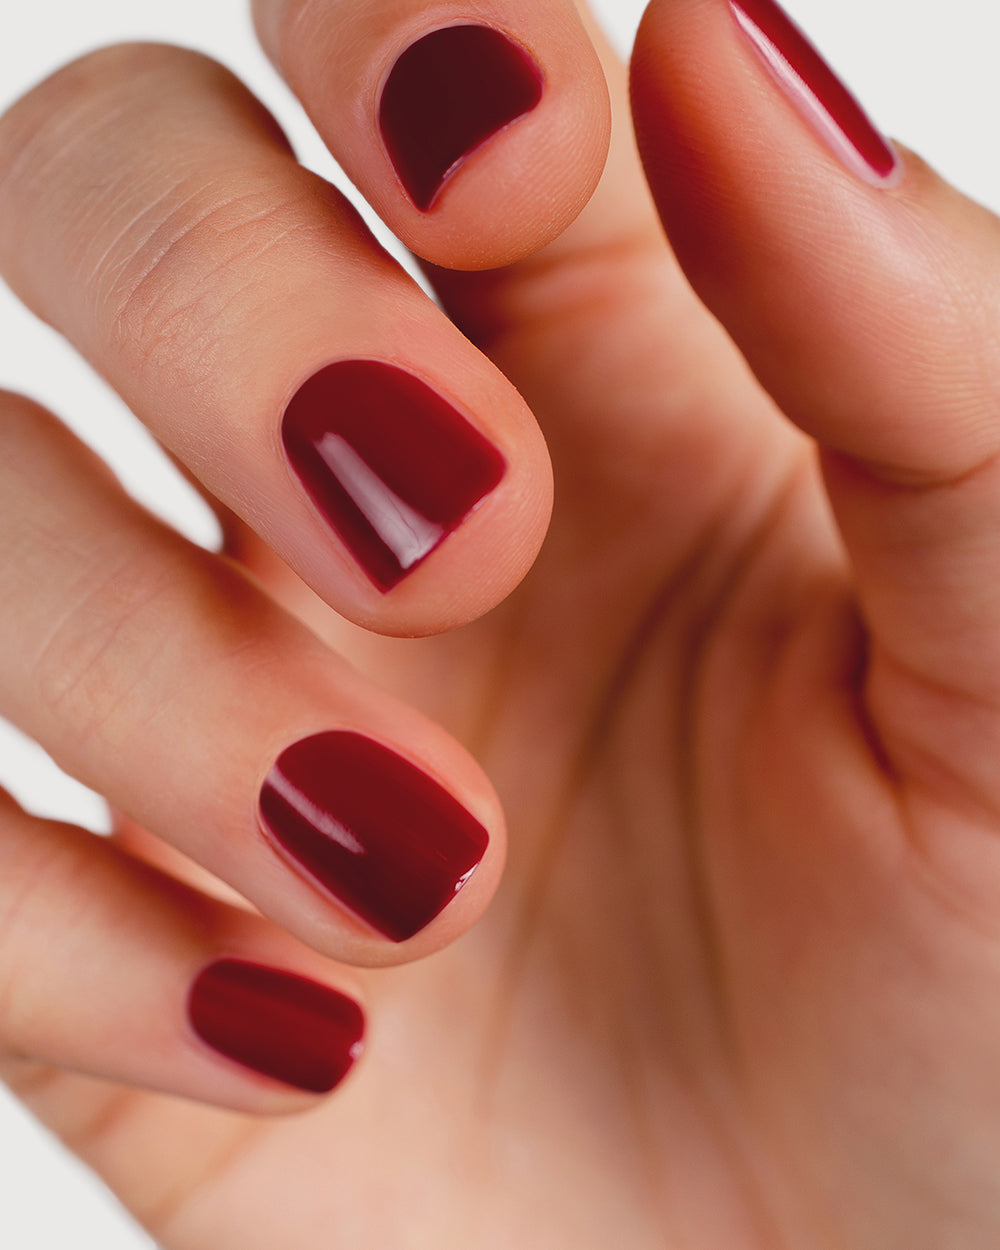 Plum red nail polish hand swatch on fair skin tone up-close